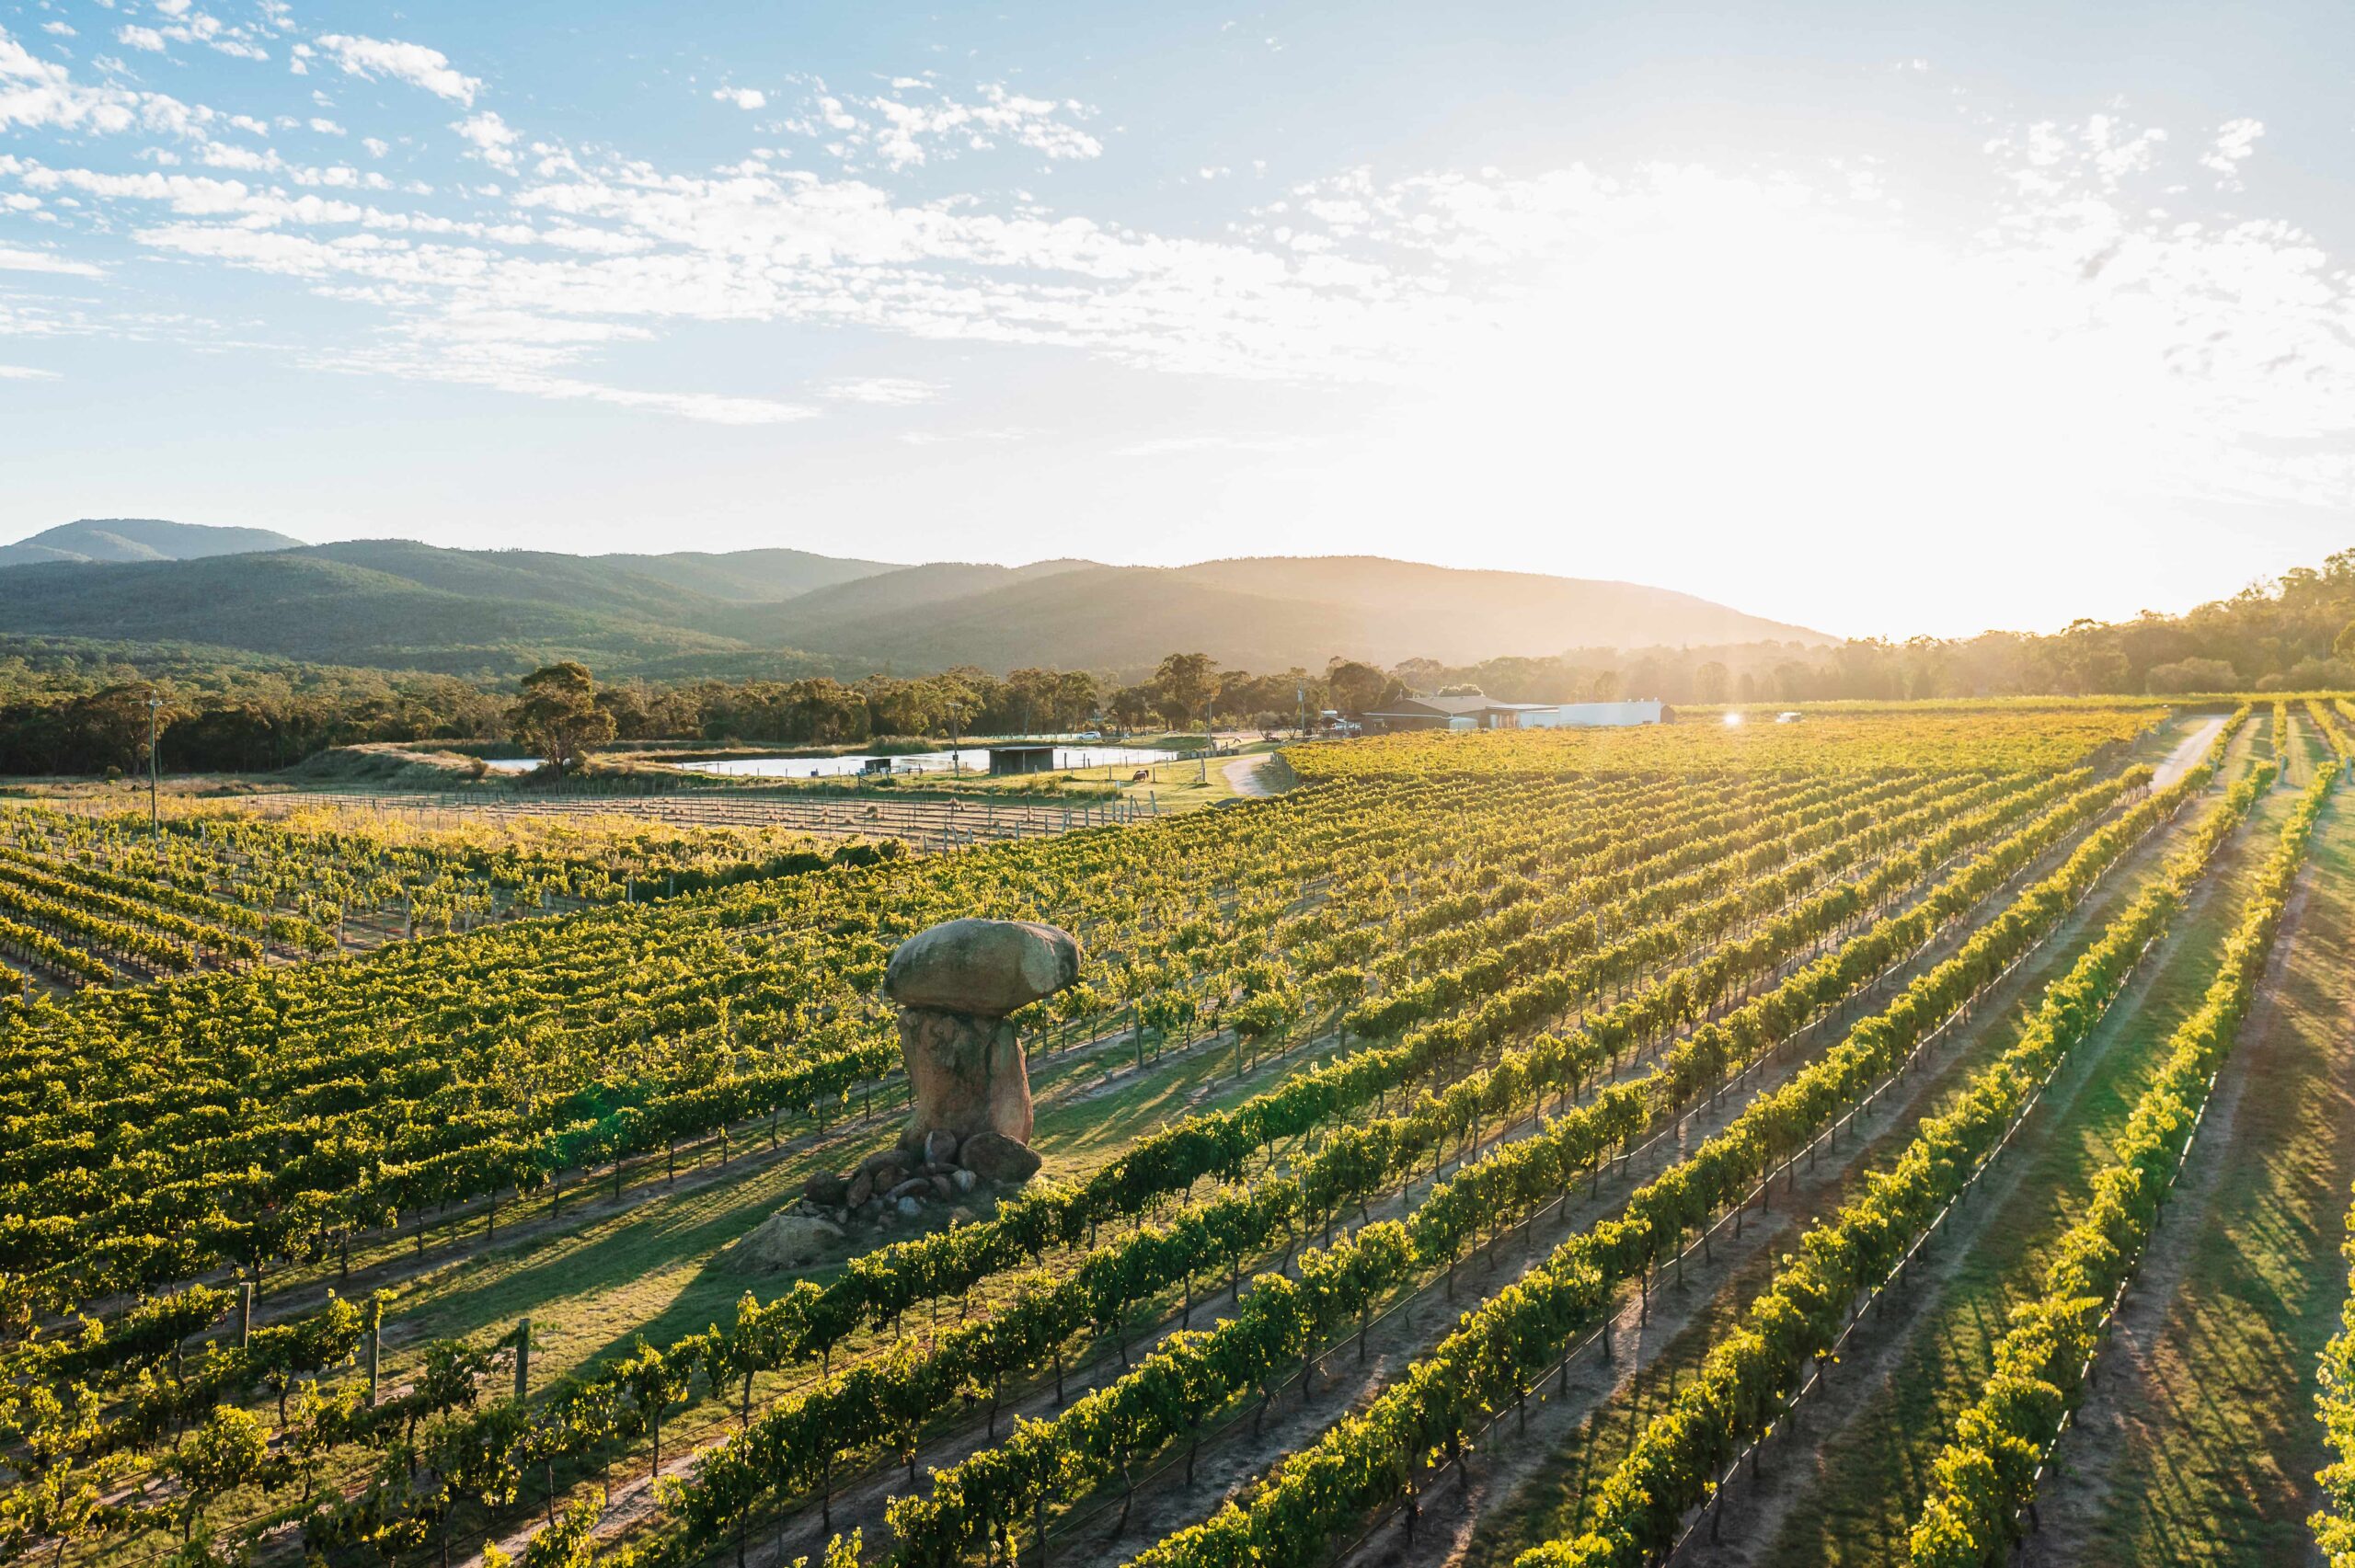 Balancing heart vineyard in Granite Belt Wine Country